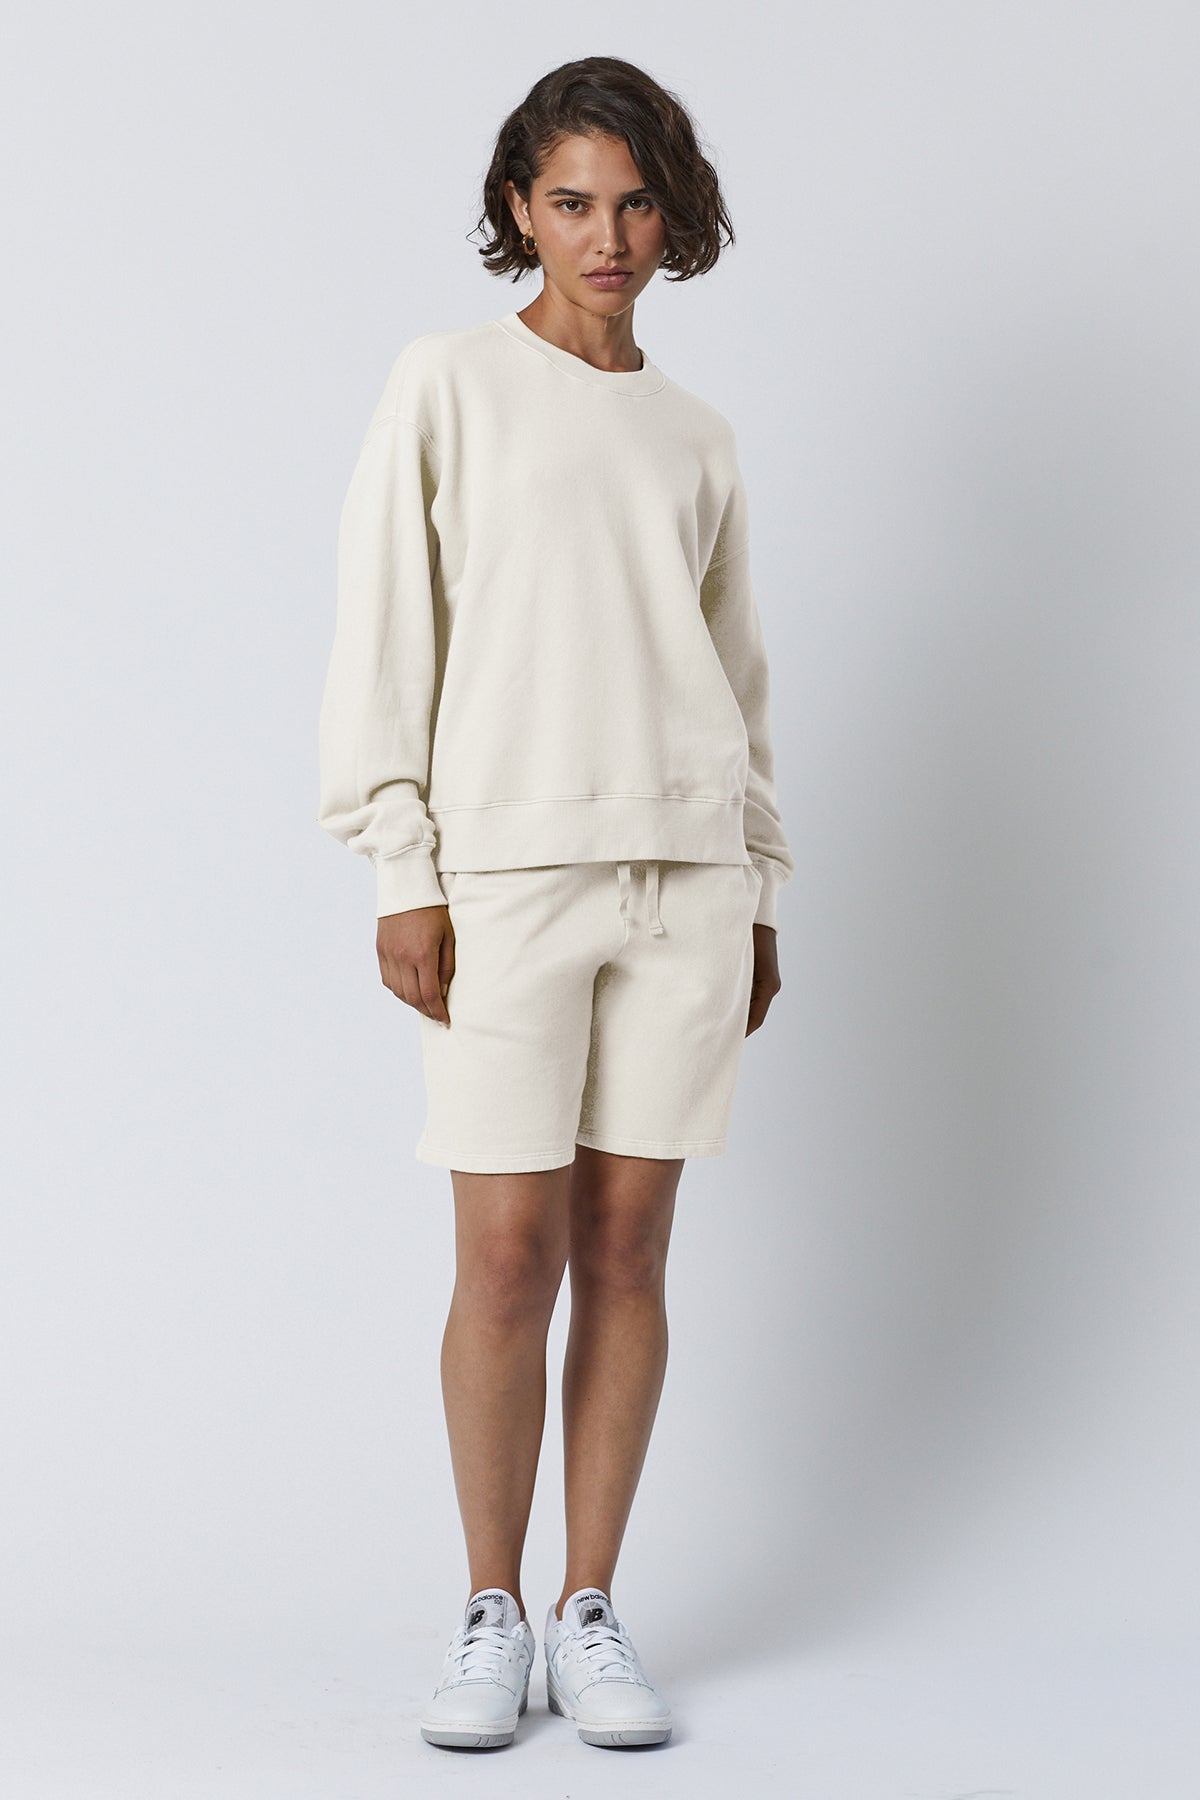 The model is wearing a Velvet by Jenny Graham LAGUNA SWEATSHORT and shorts.-26019358081217